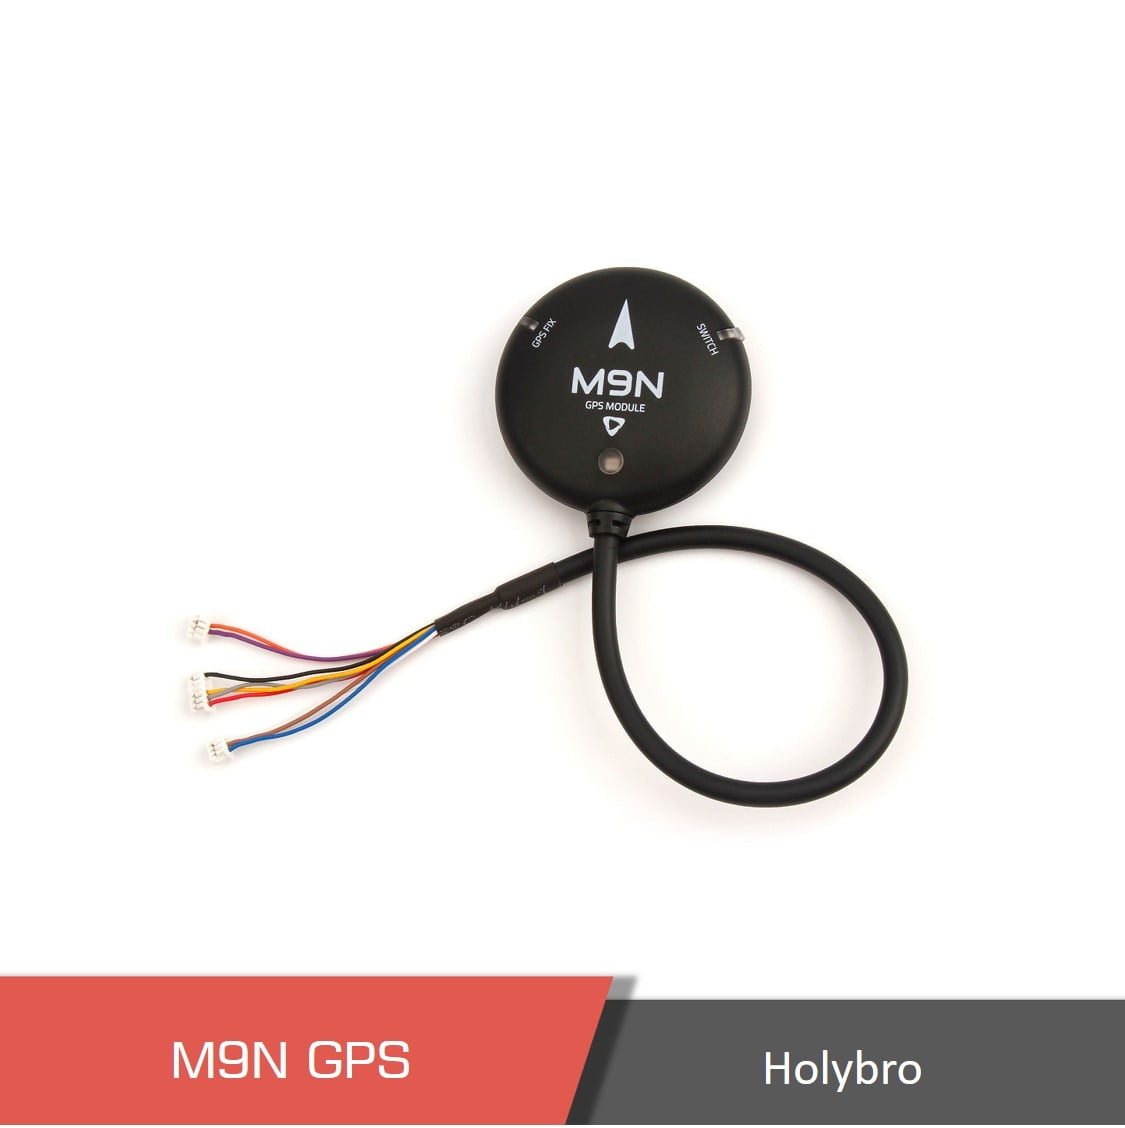 Holybro M9N with UBLOX M9N module compass